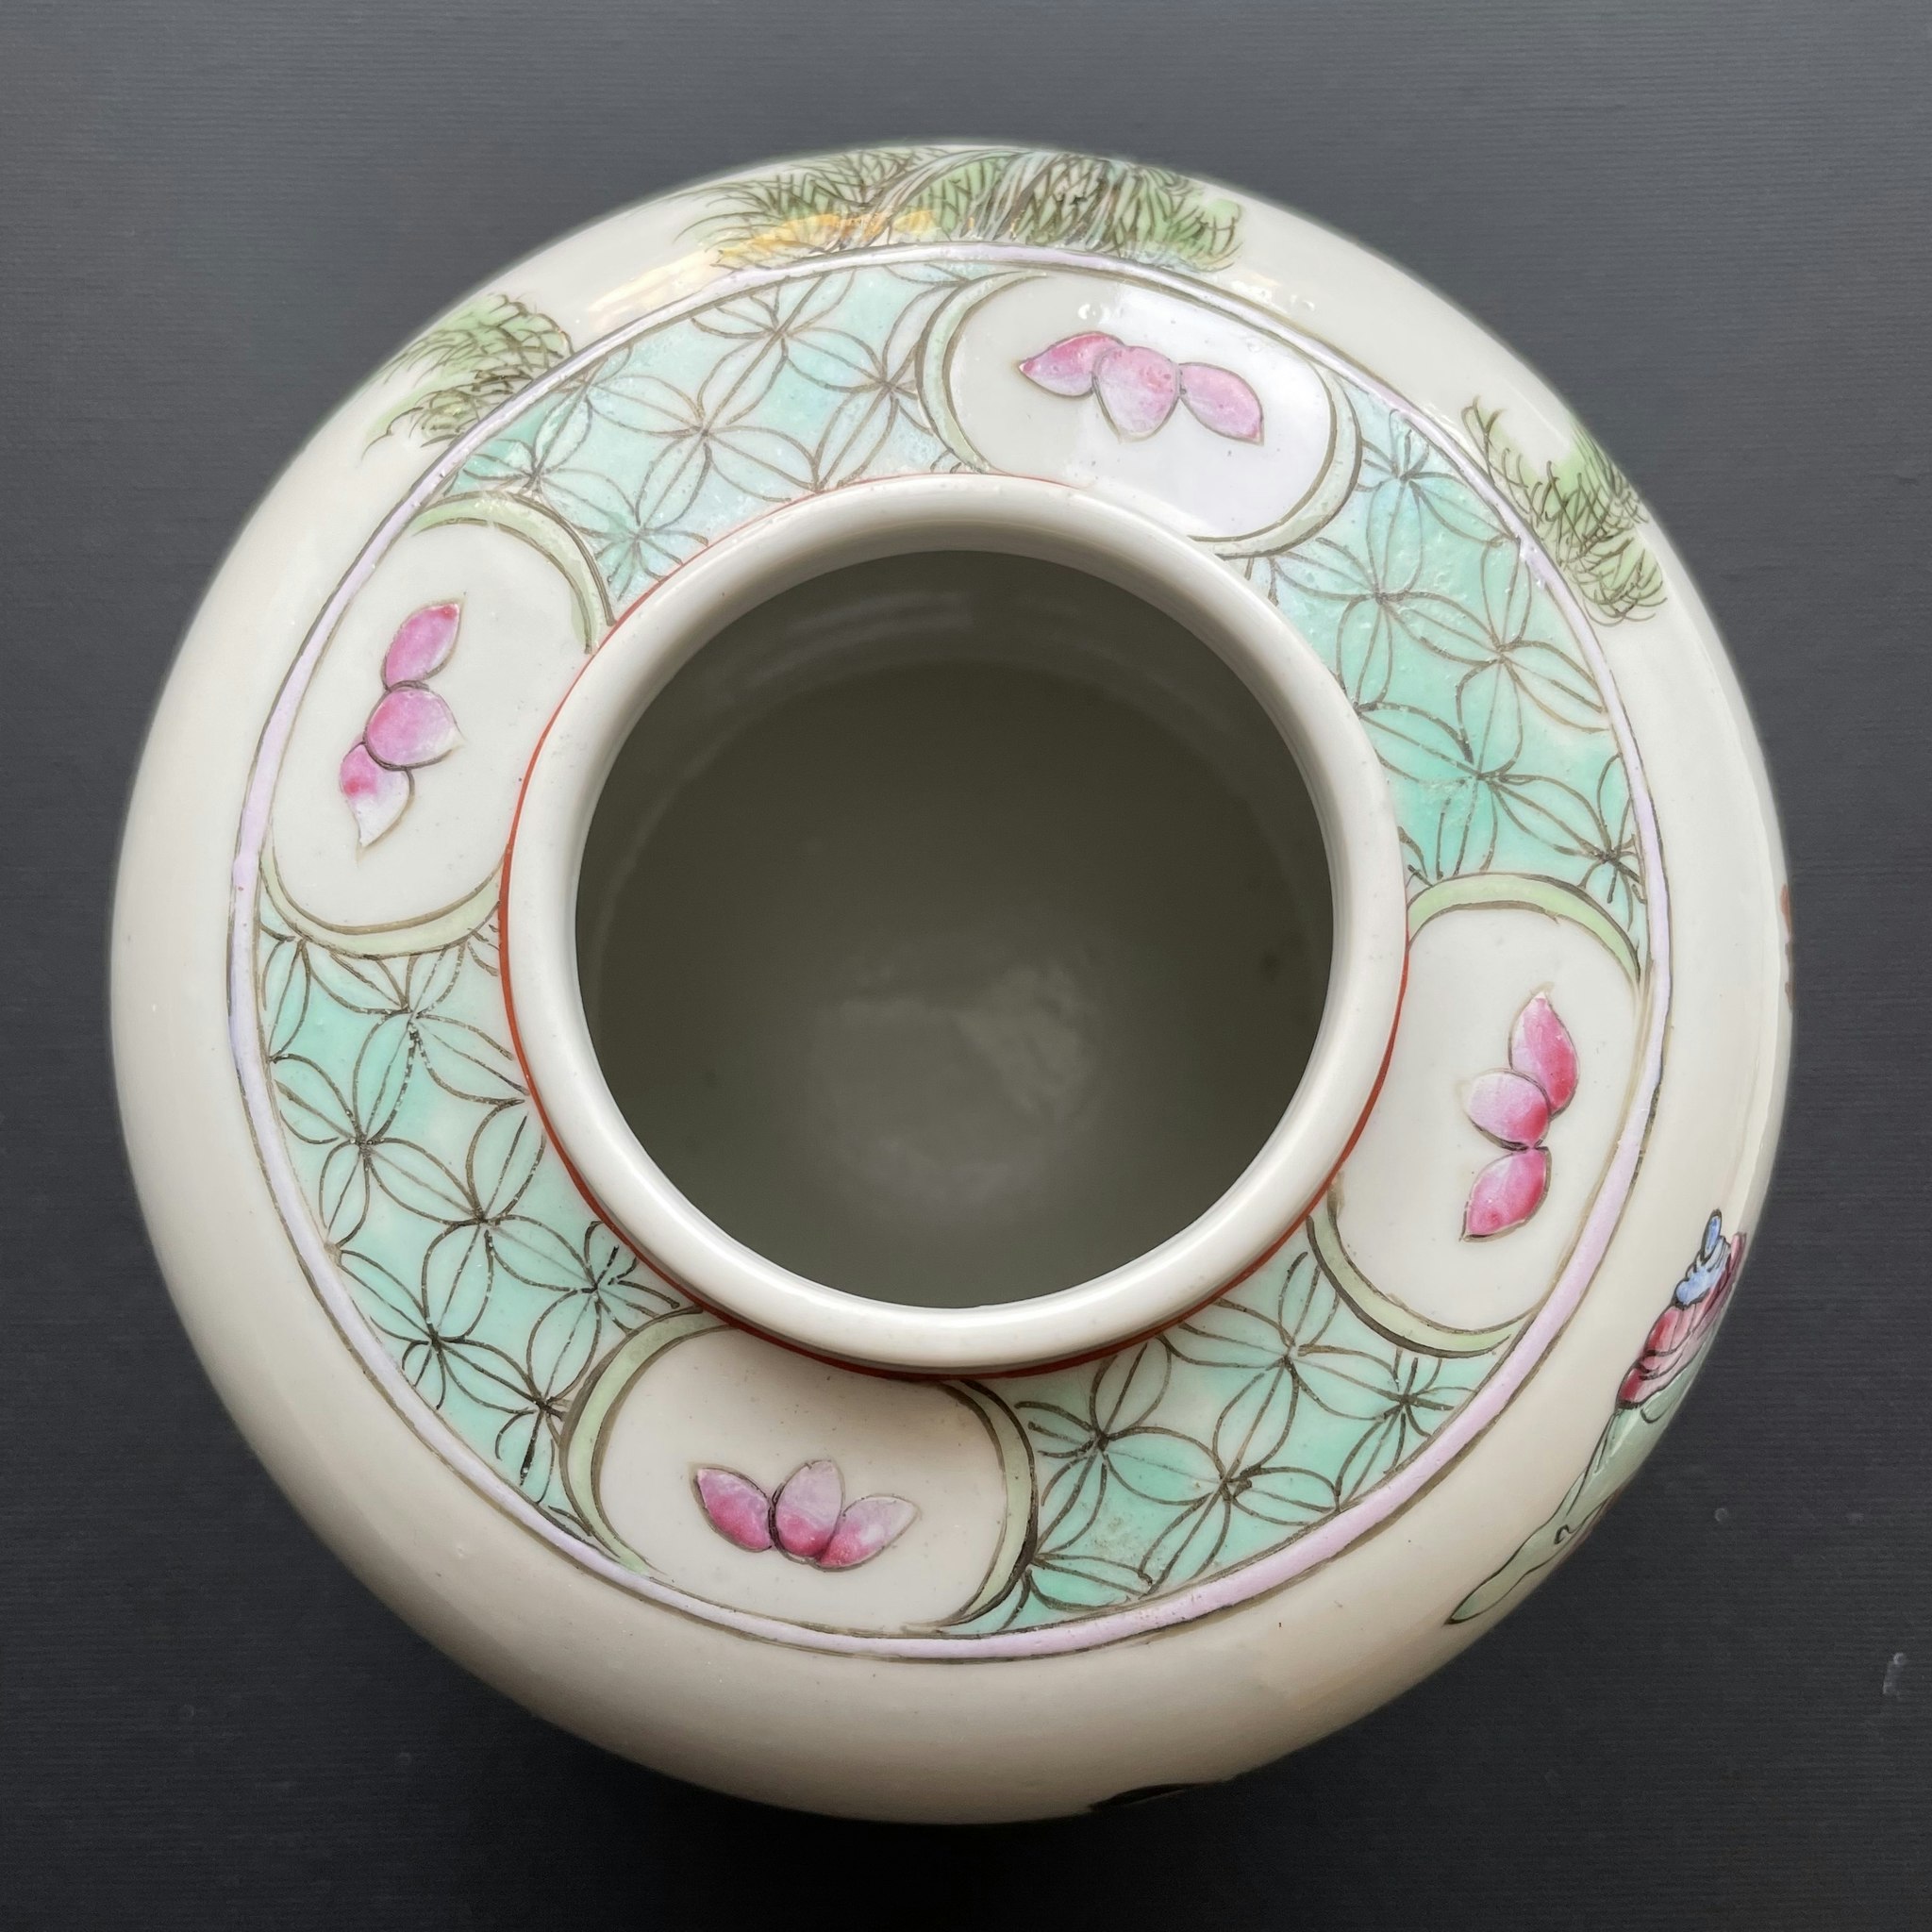 Antique Chinese Porcelain Tea Jar / Ginger Jar republic period #1029